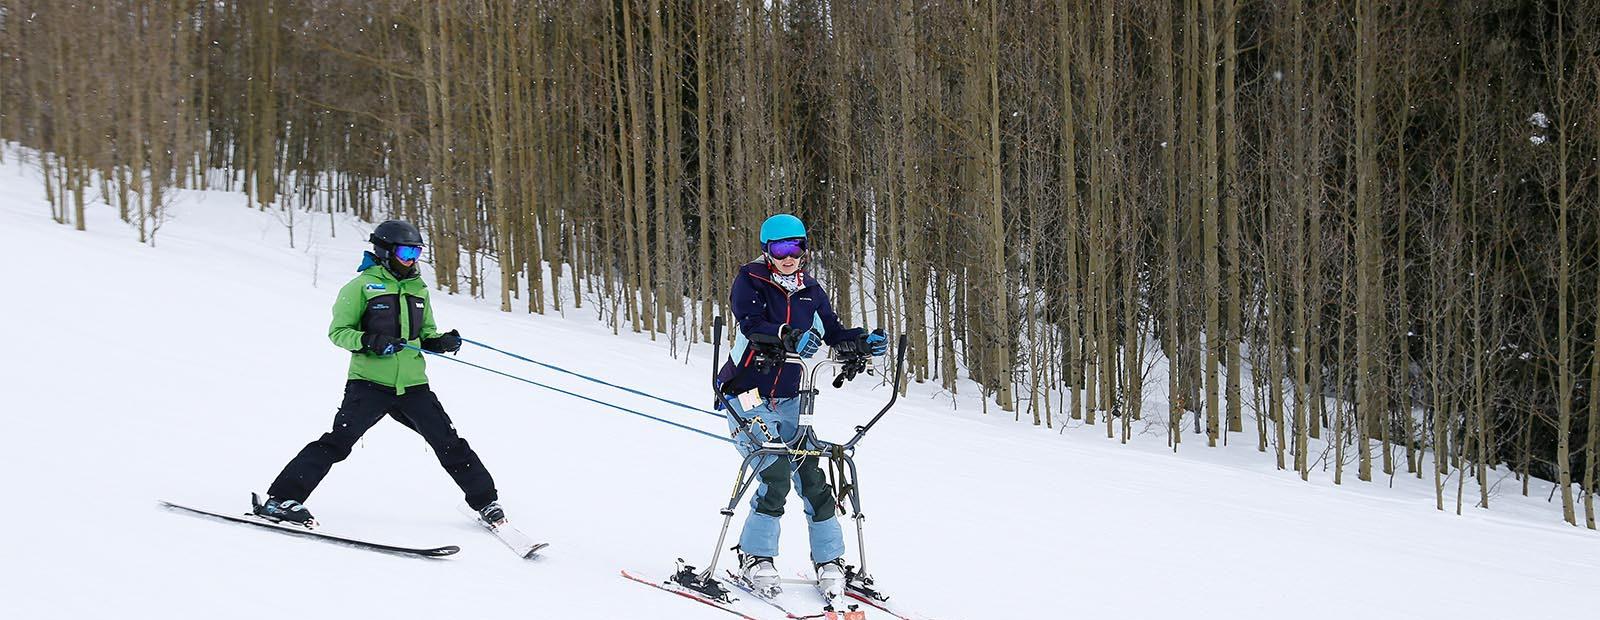 Woman skiing on slider